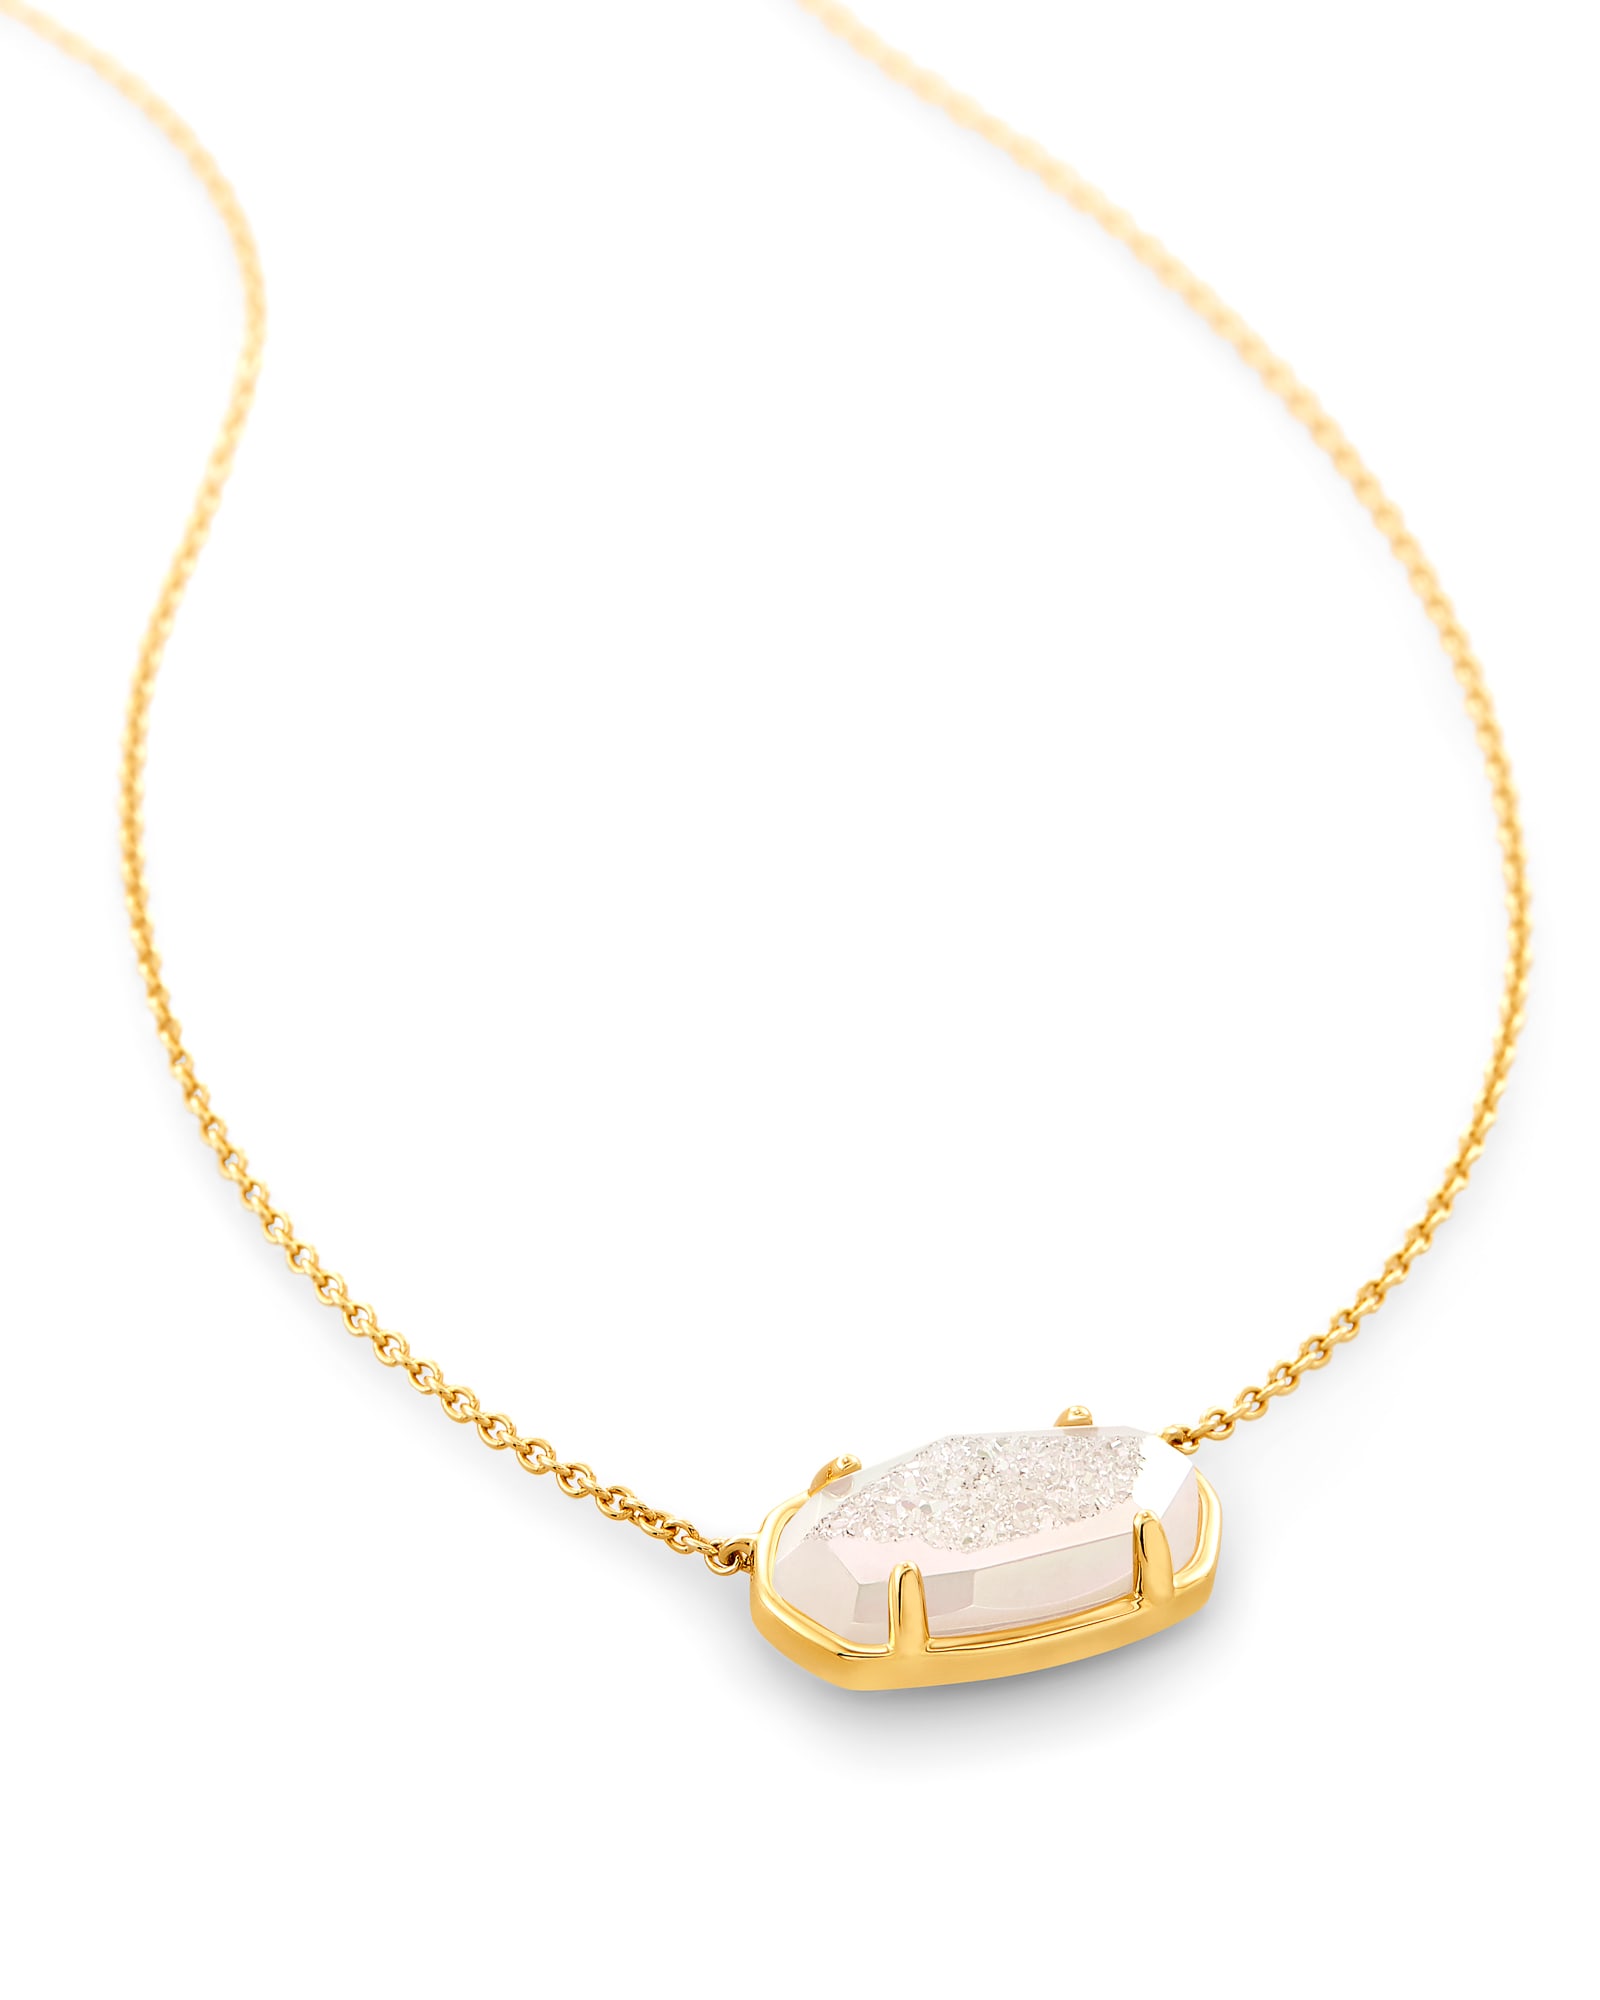 Kendra Scott Dira Pendant Necklace in 18K Gold Vermeil - Rhinestone Angel